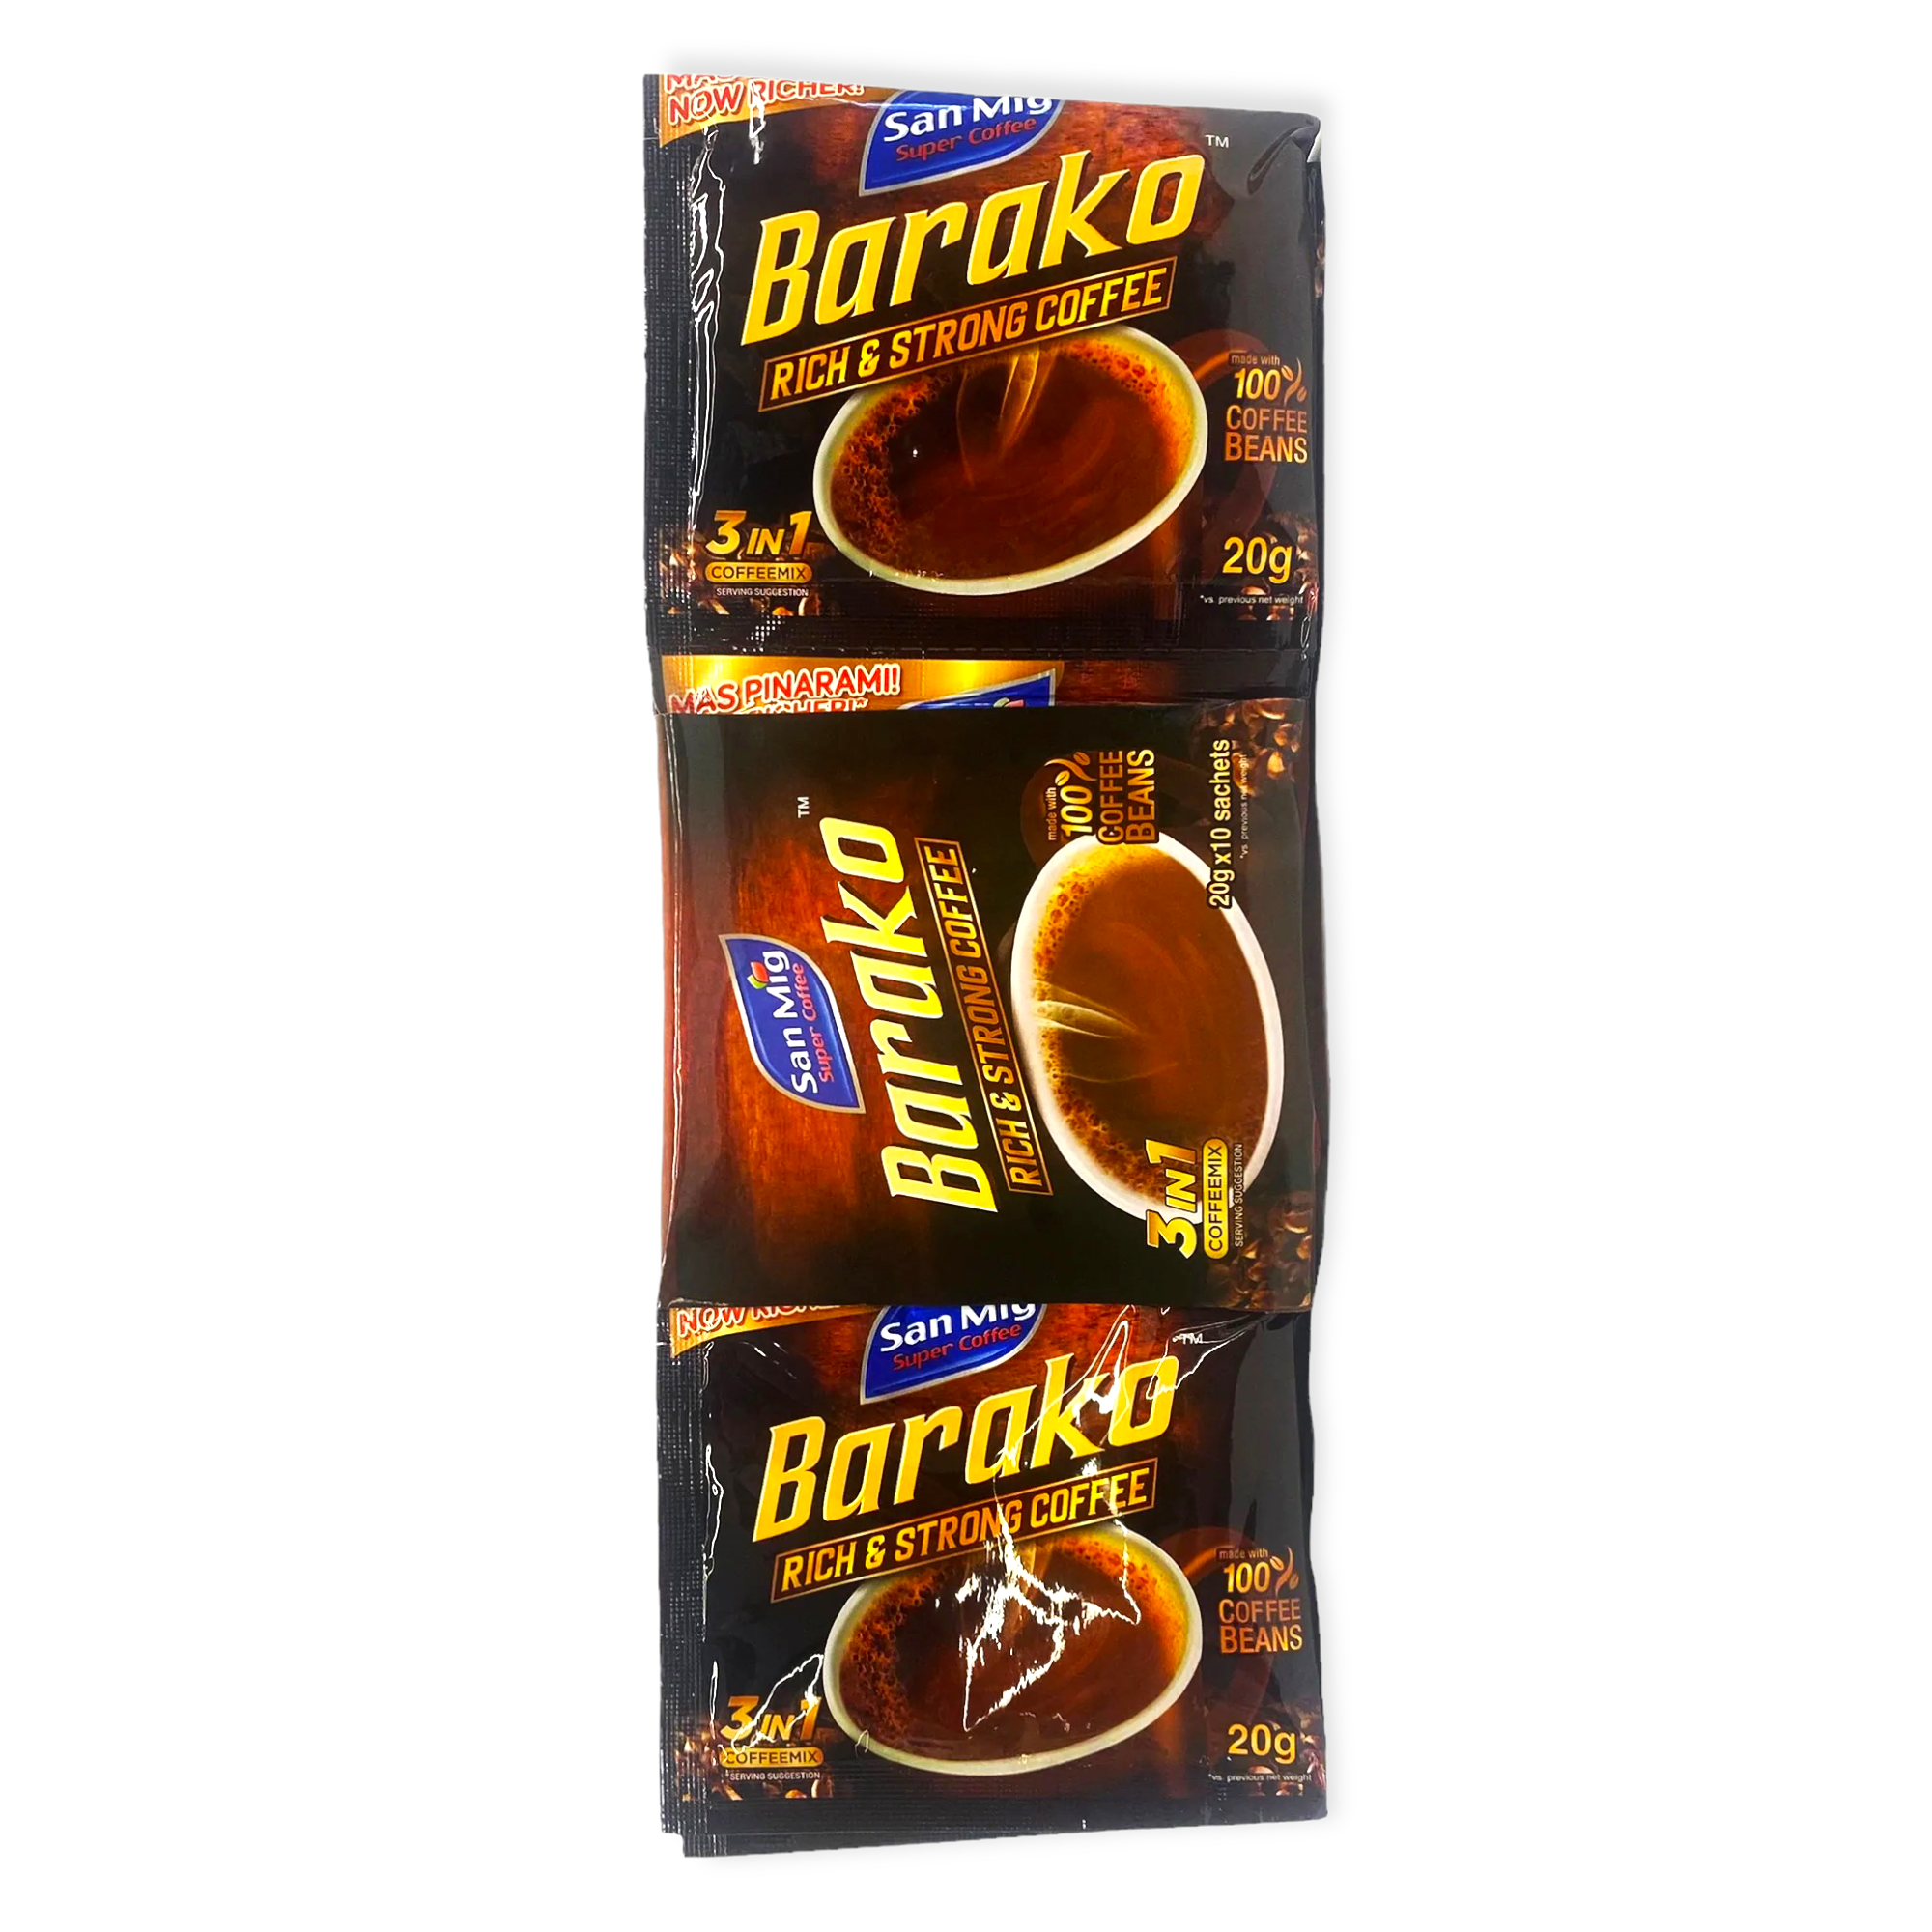 San Mig - Super Coffee - Barako - 3 in 1 Coffeemix - 10 x 20g